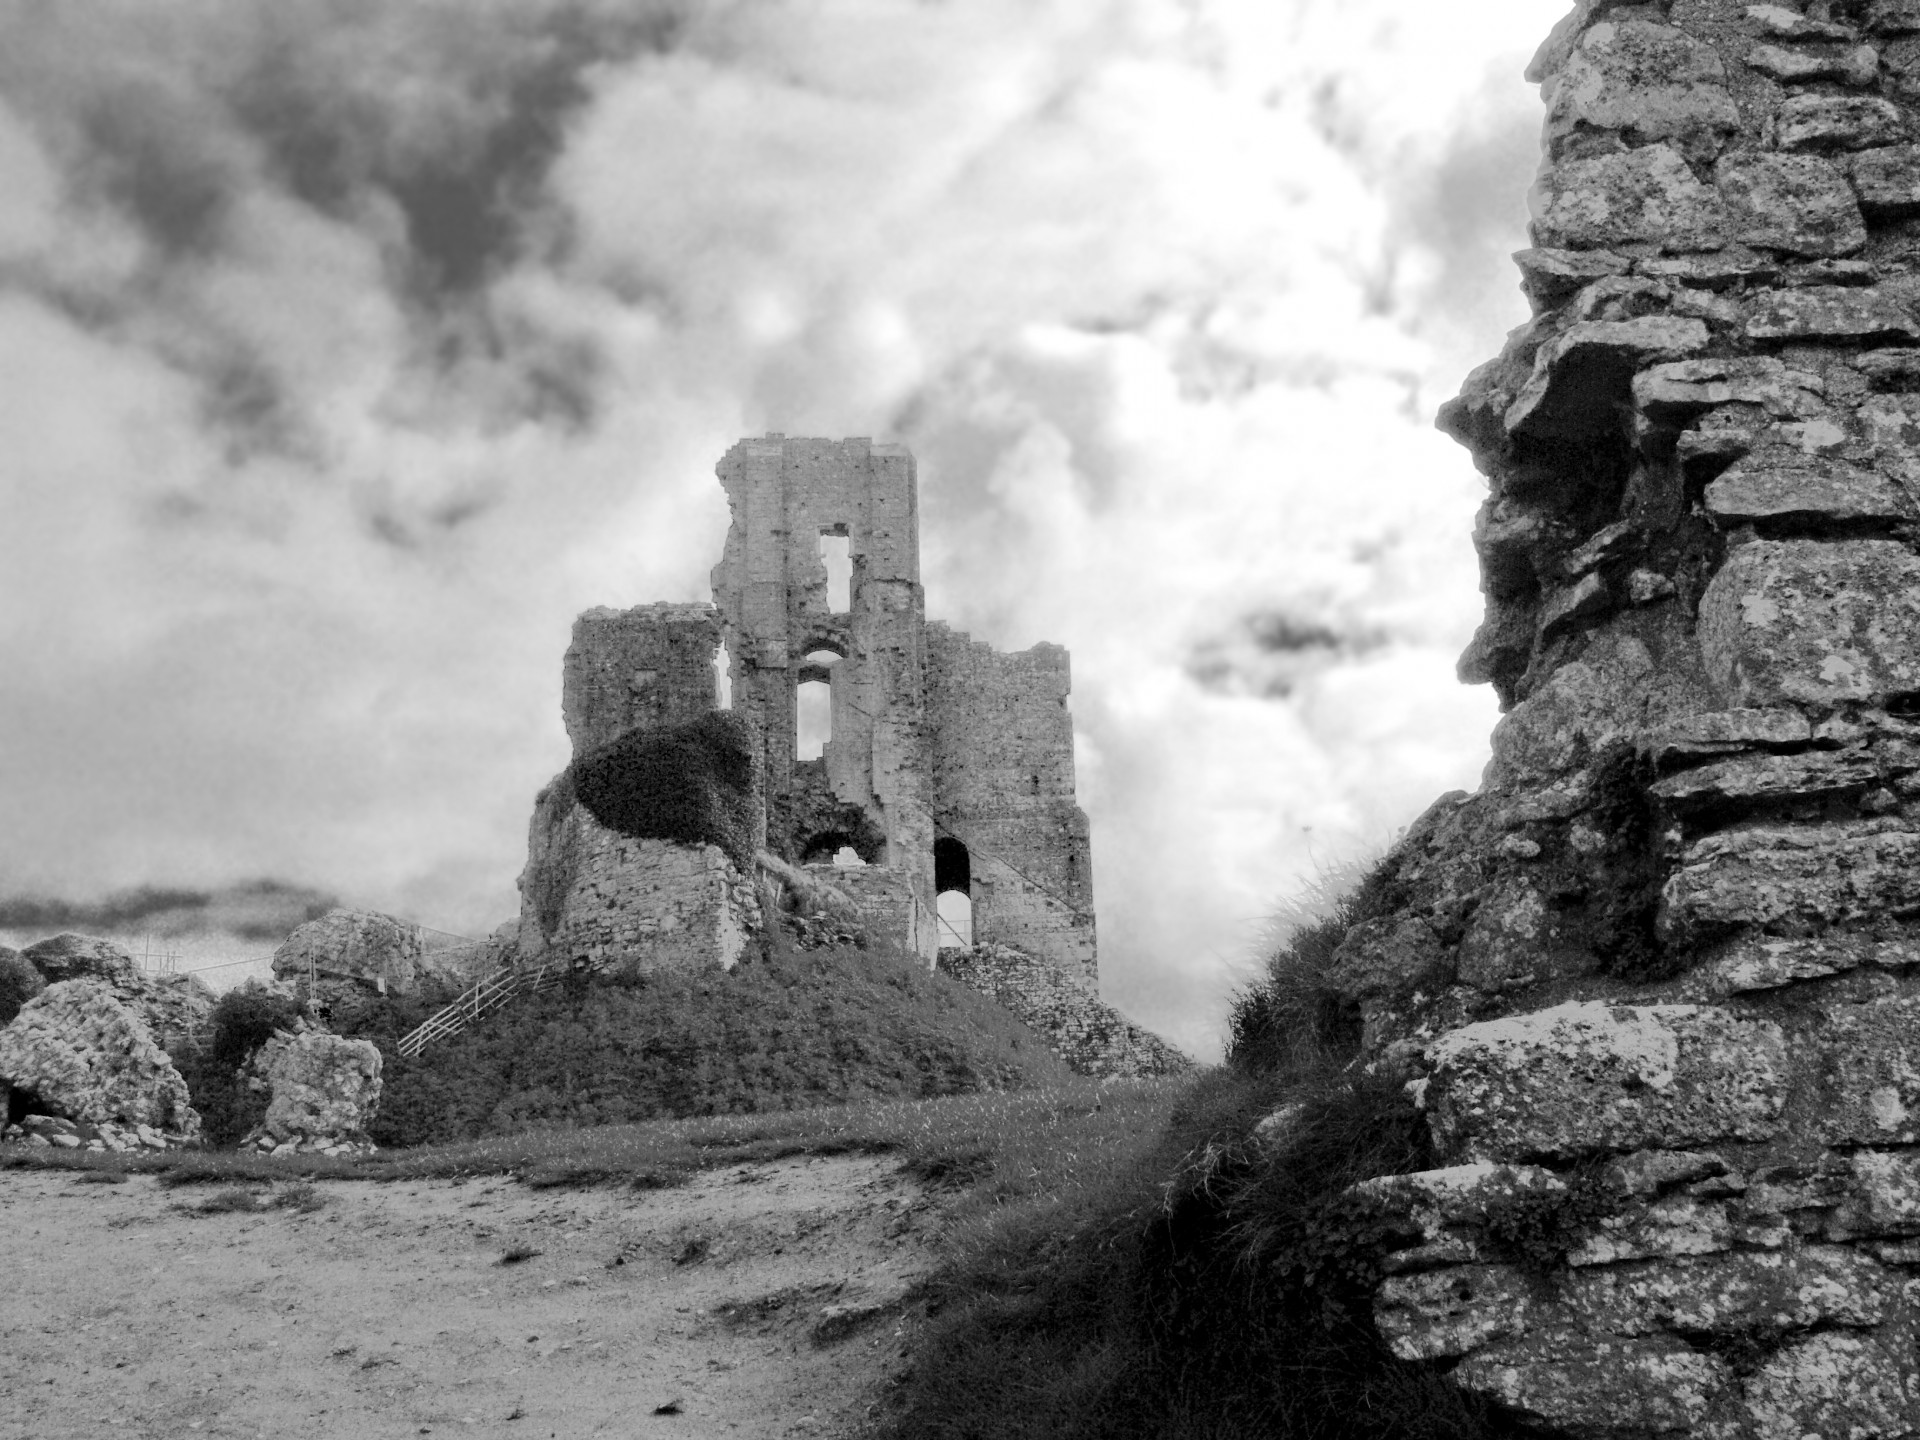 General 1920x1440 architecture castle ancient tower ruins monochrome photography stones clouds hills